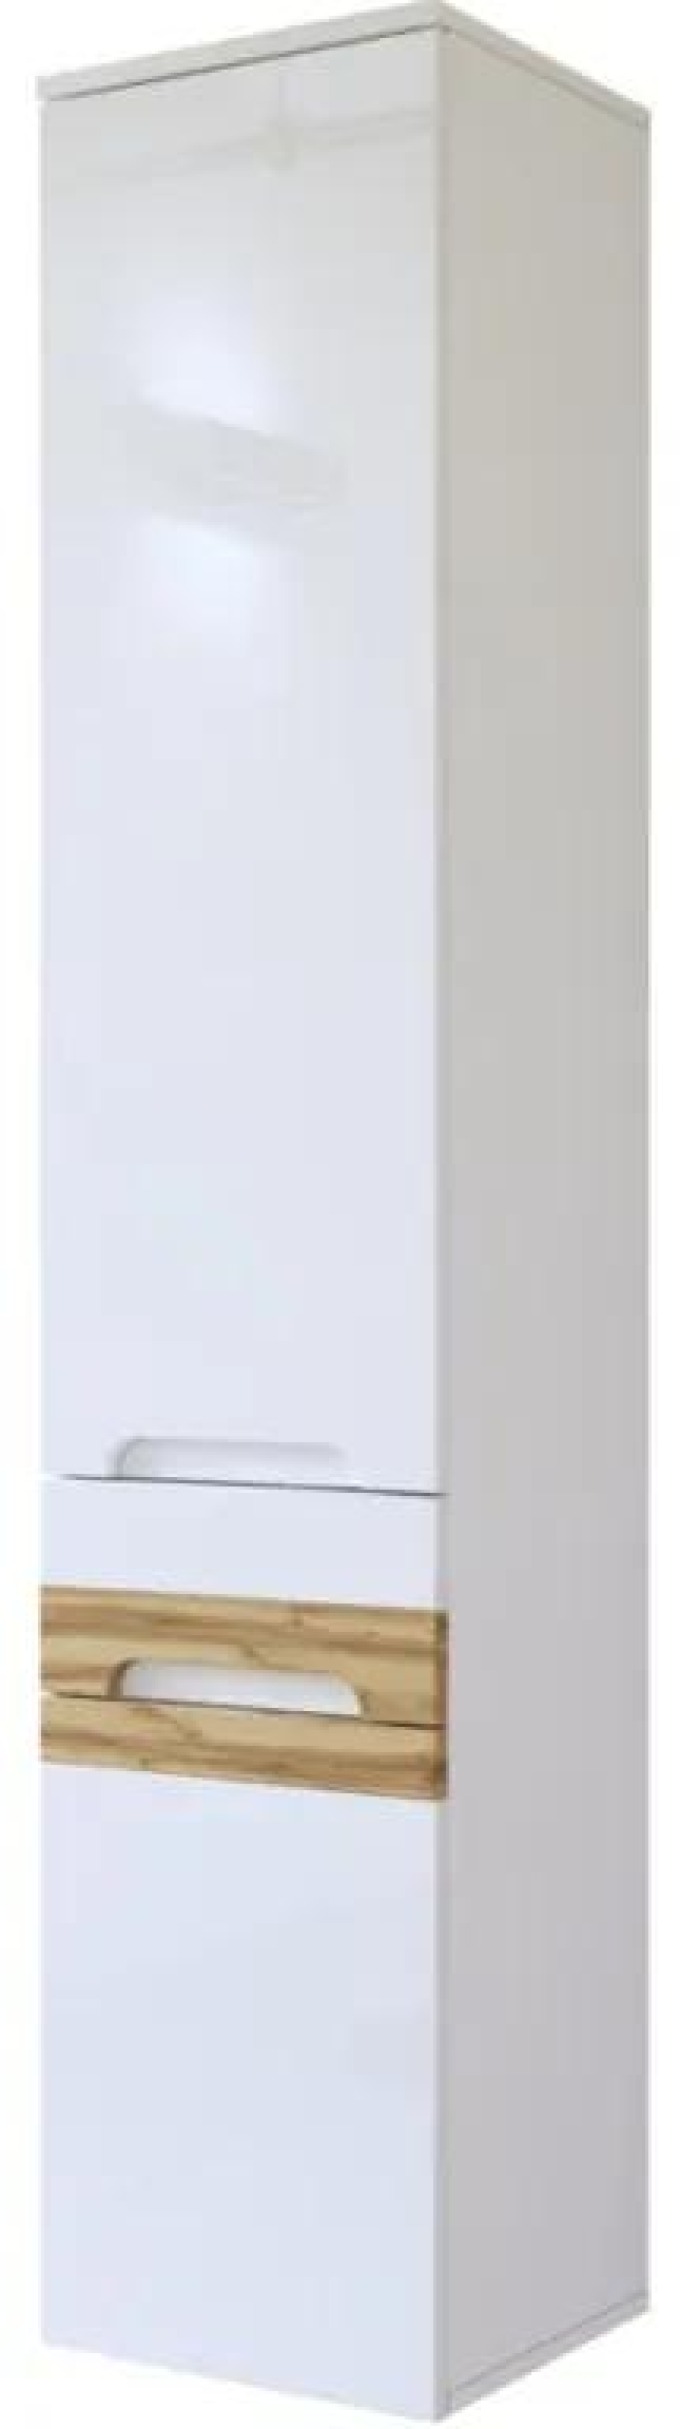 COMAD Vysoká závěsná skříňka - GALAXY 800 white, bílá/lesklá bílá/dub votan